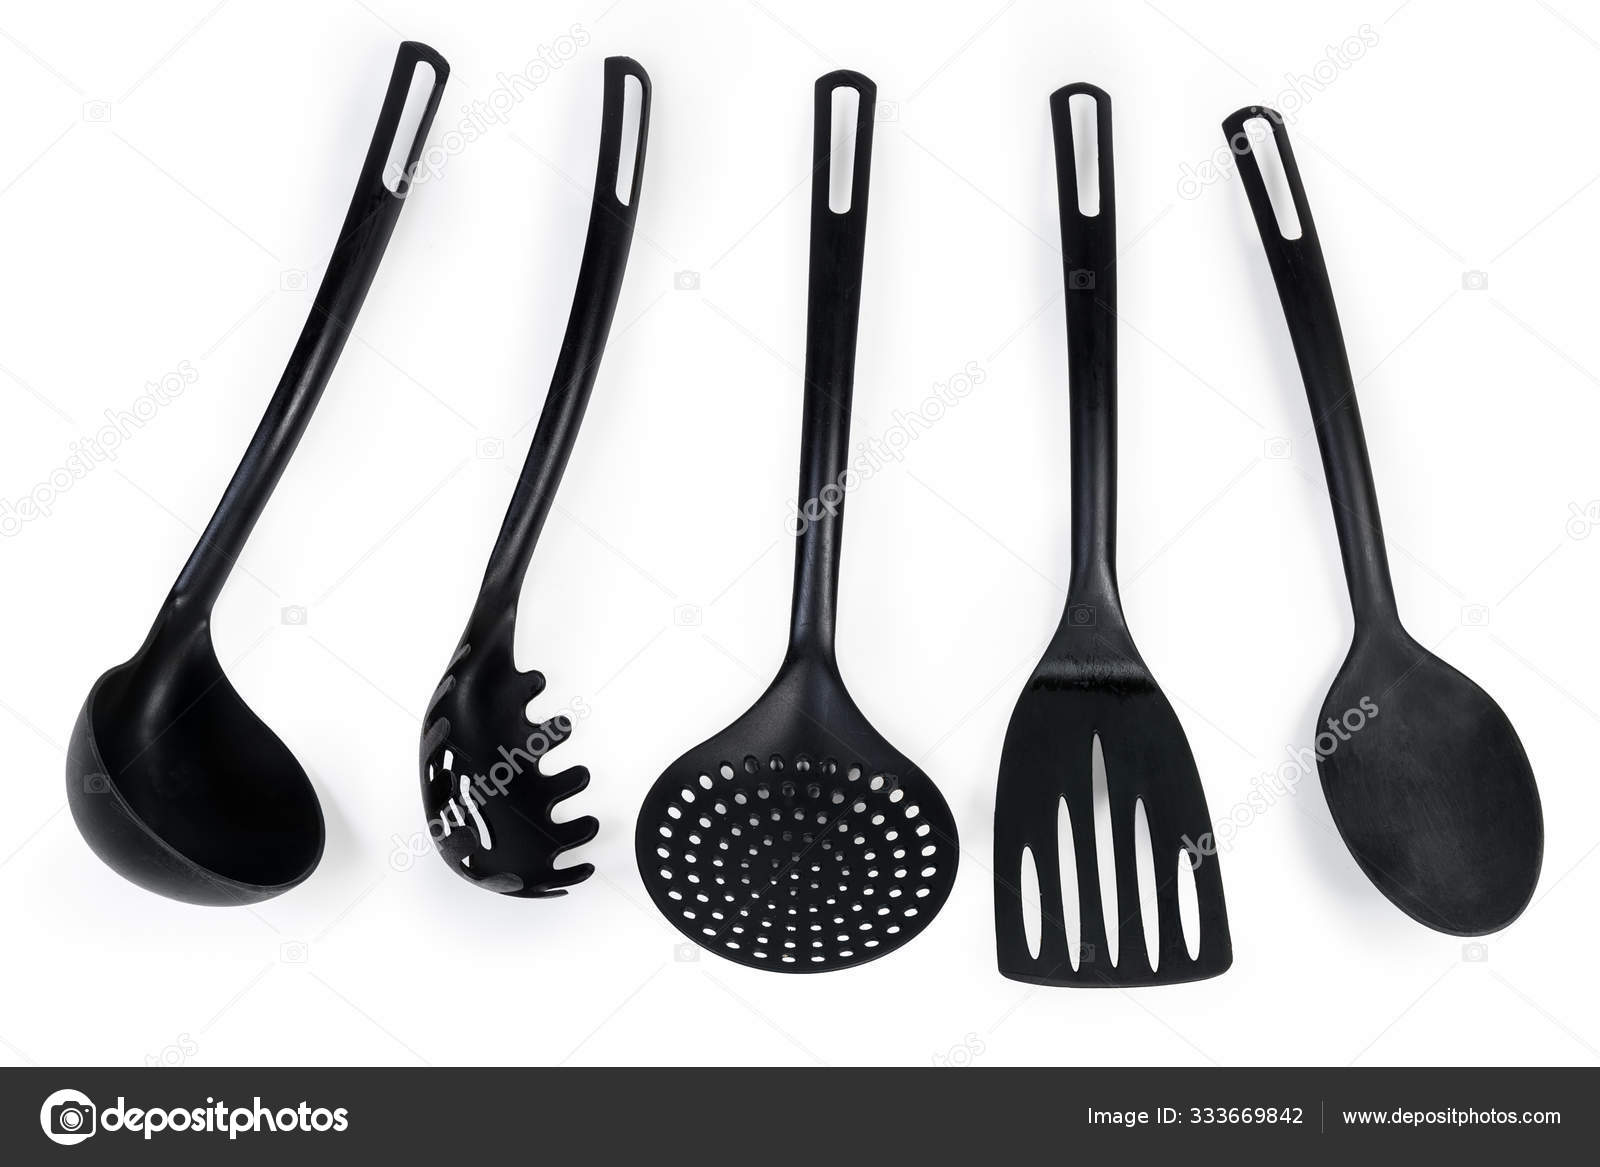 https://st3.depositphotos.com/1628711/33366/i/1600/depositphotos_333669842-stock-photo-different-plastic-cooking-utensils-on.jpg